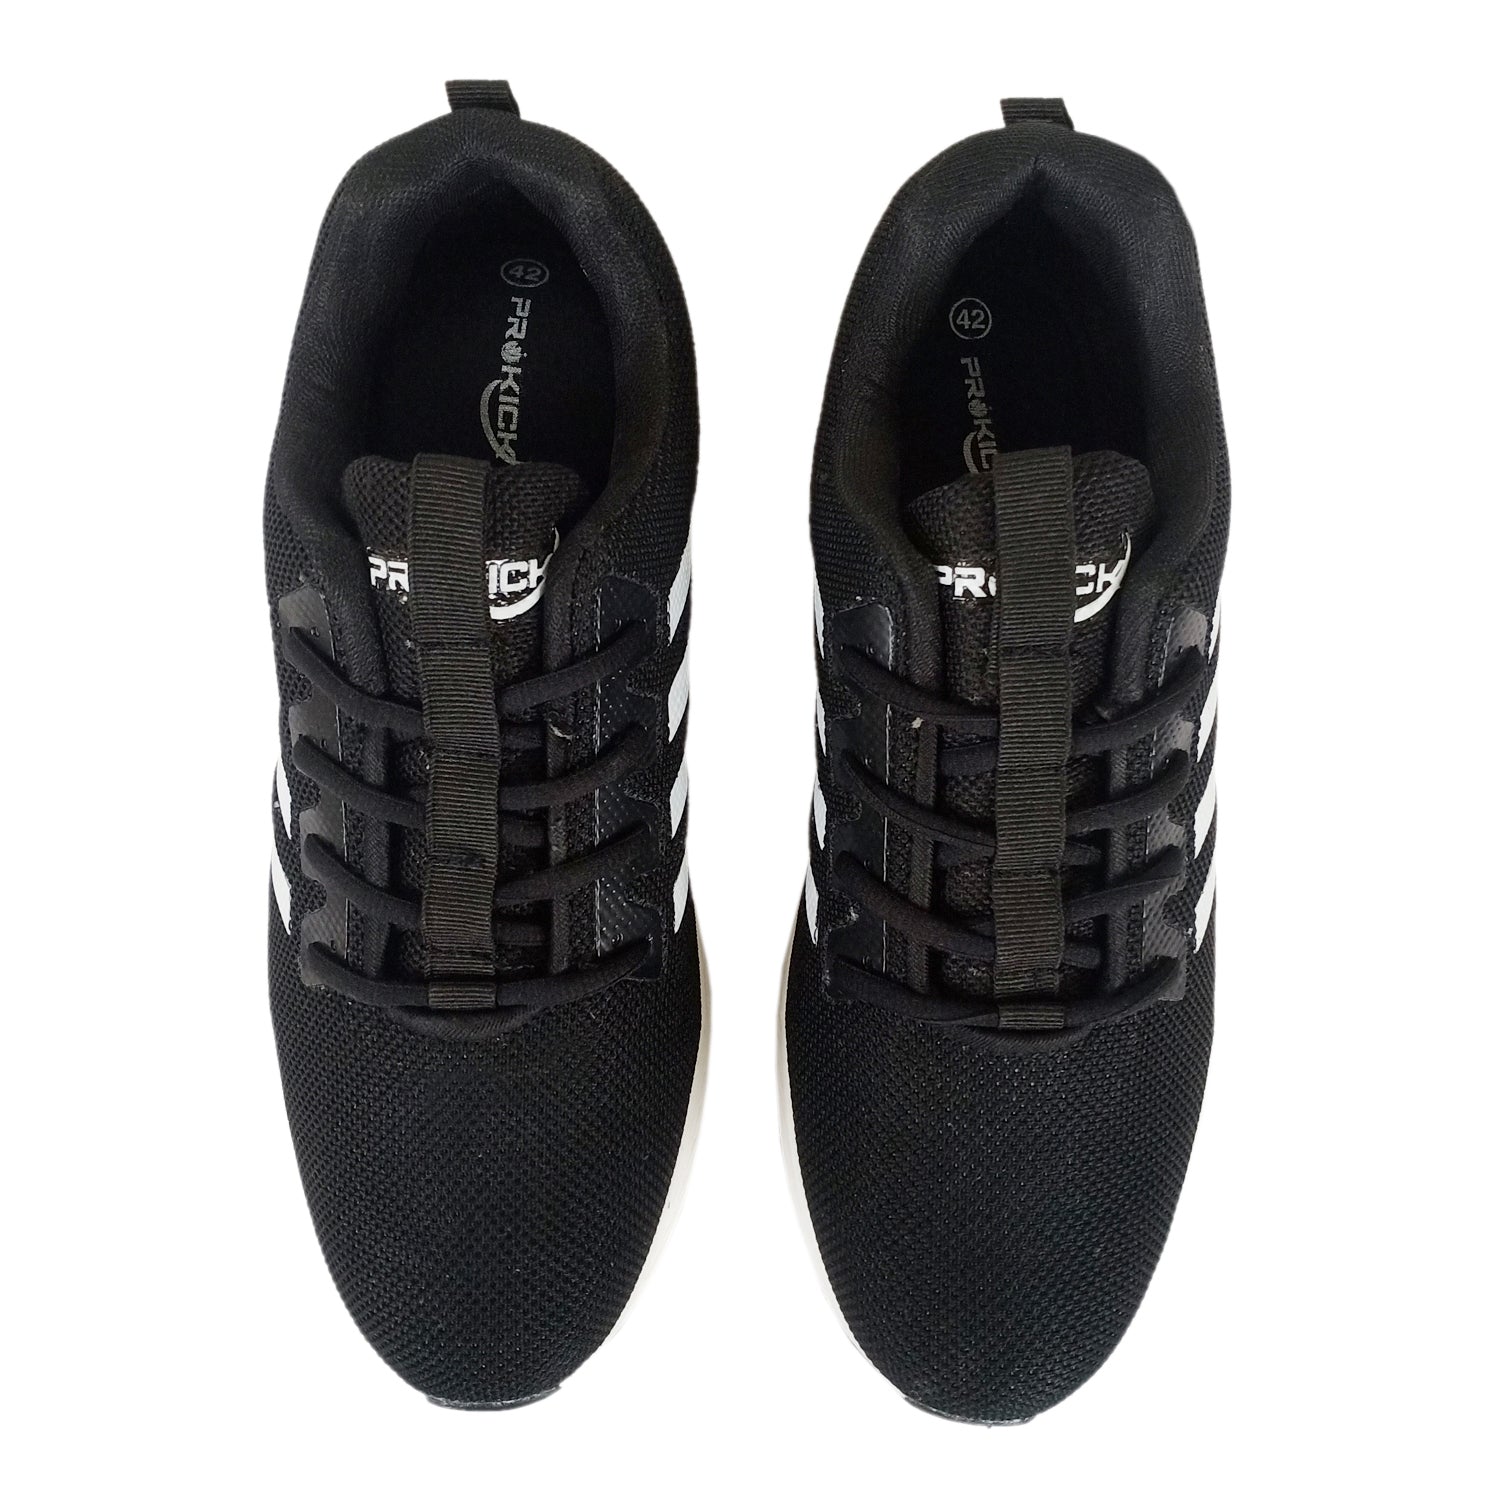 Prokick Jogger Running/Walking Shoes, Black - Best Price online Prokicksports.com